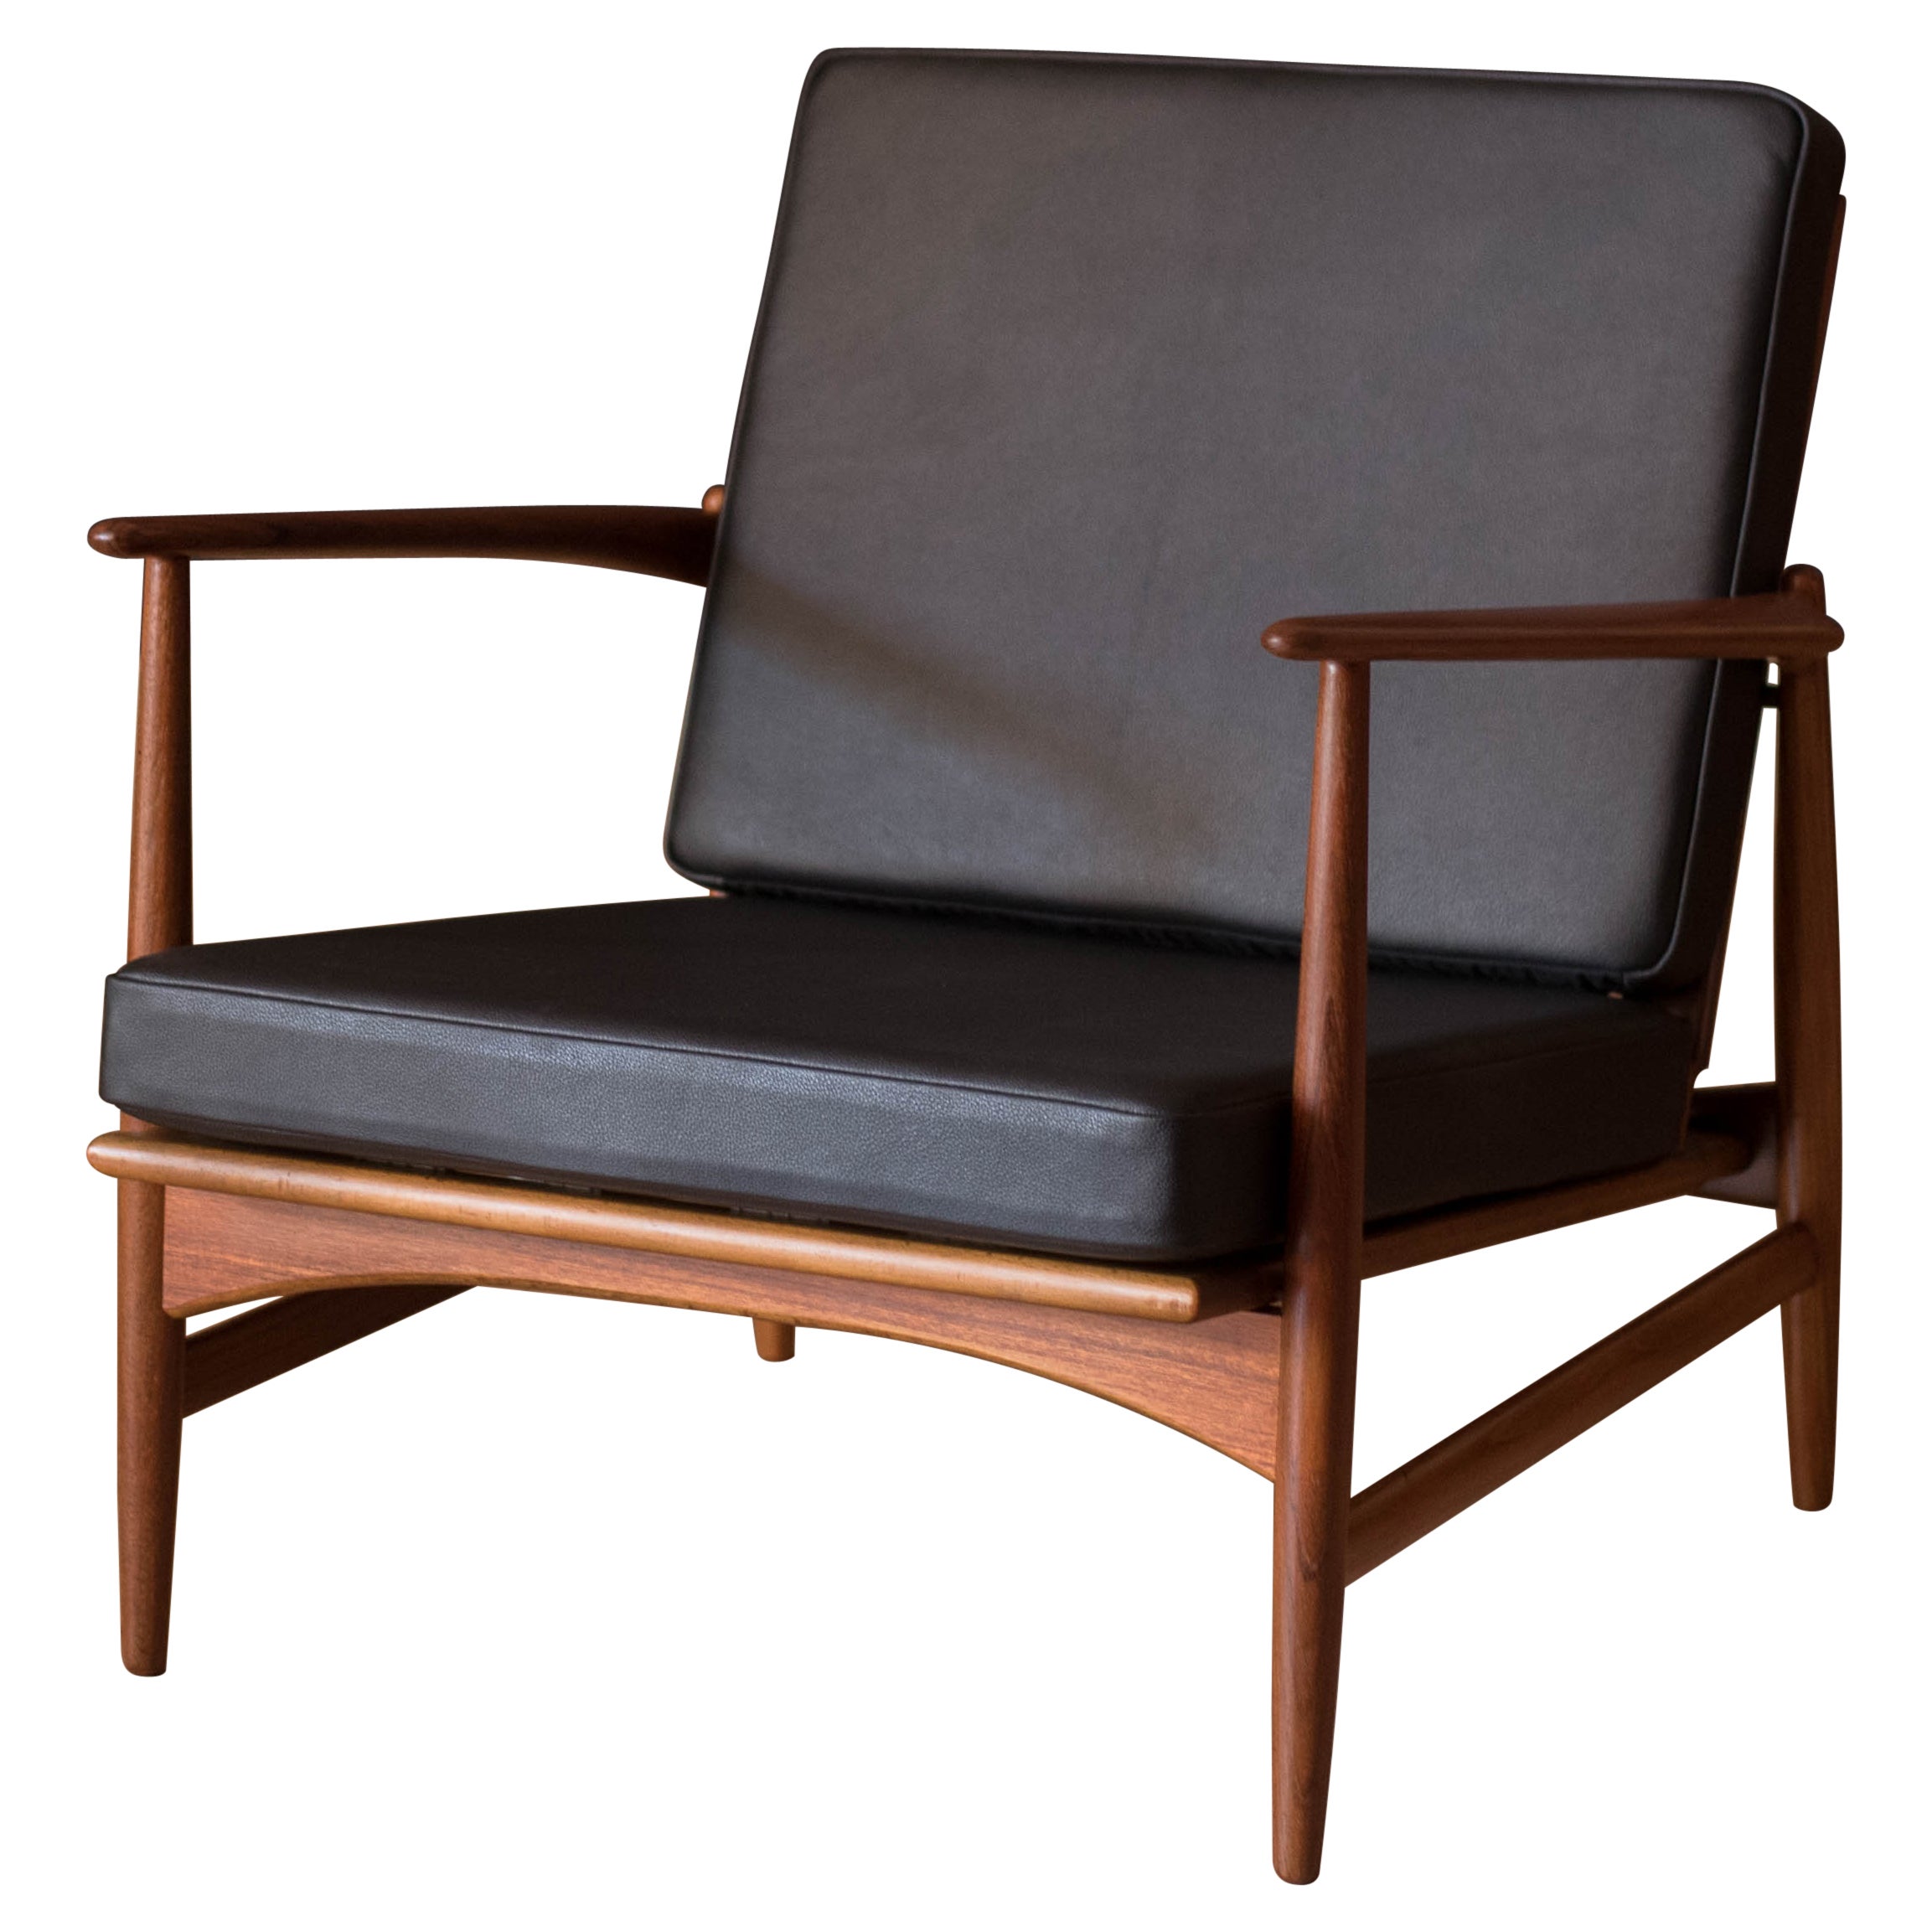 Danish Modern Teak and Black Leather Lounge Chair by Ib Kofod-Larsen for Selig